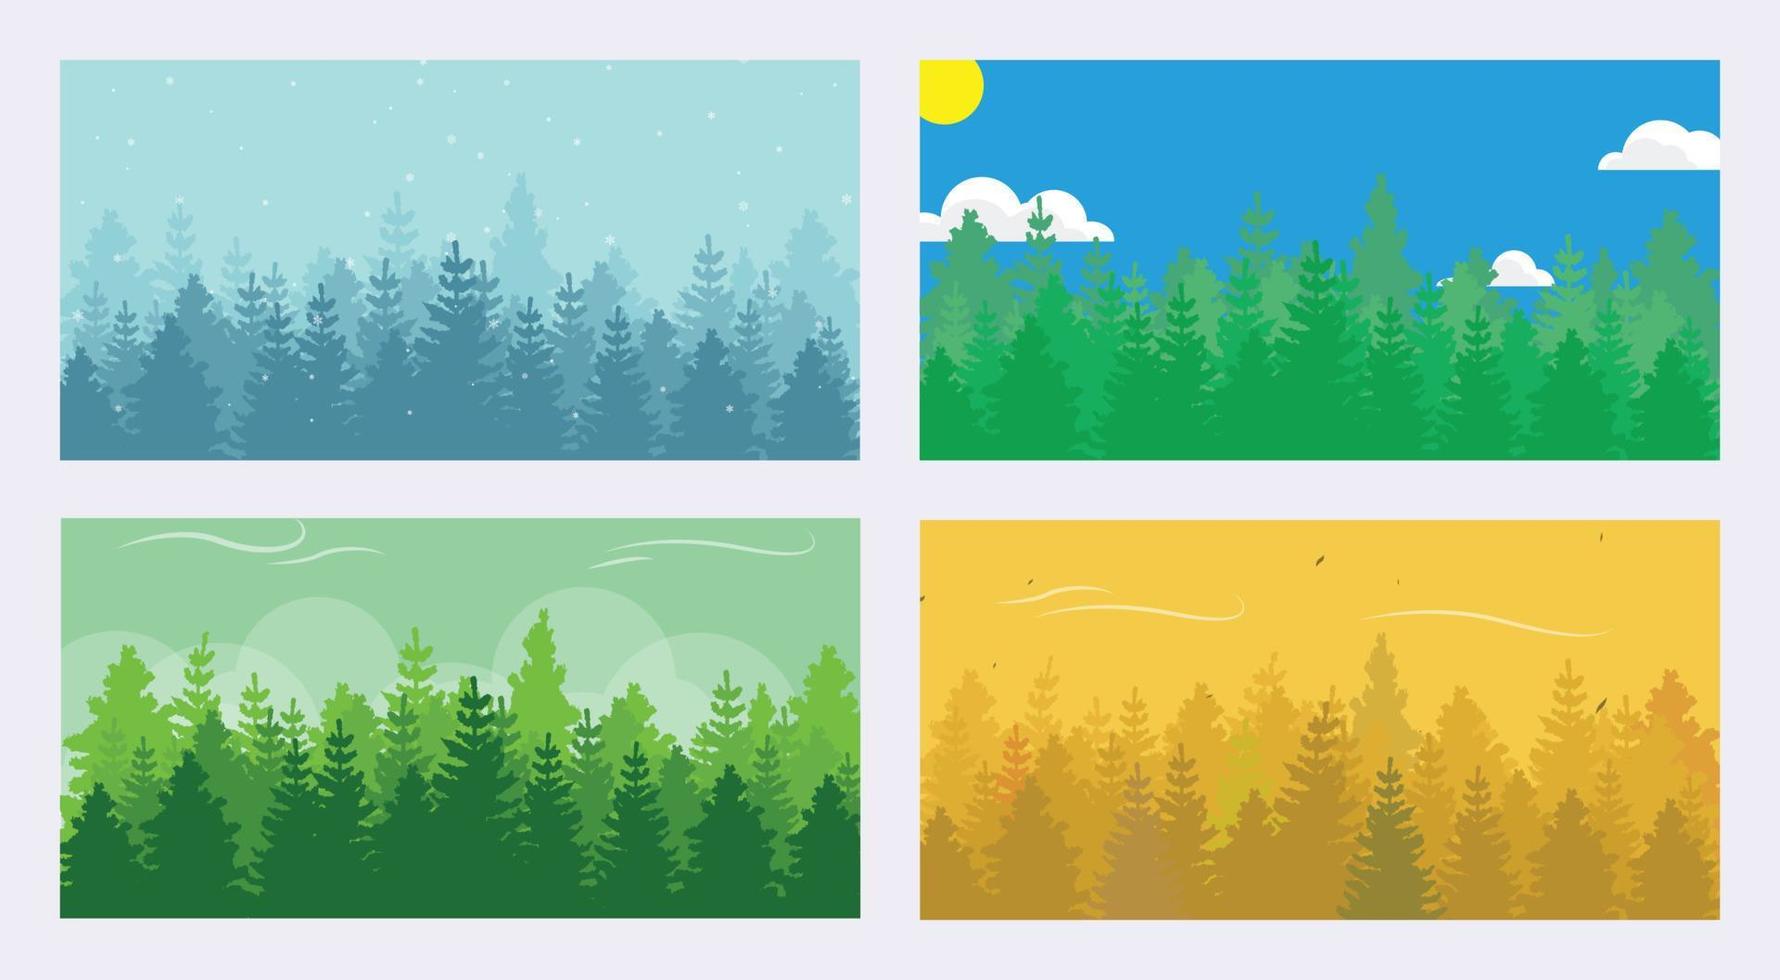 Forrest illustration in all season winter, spring, summer, autumn vector EPS10